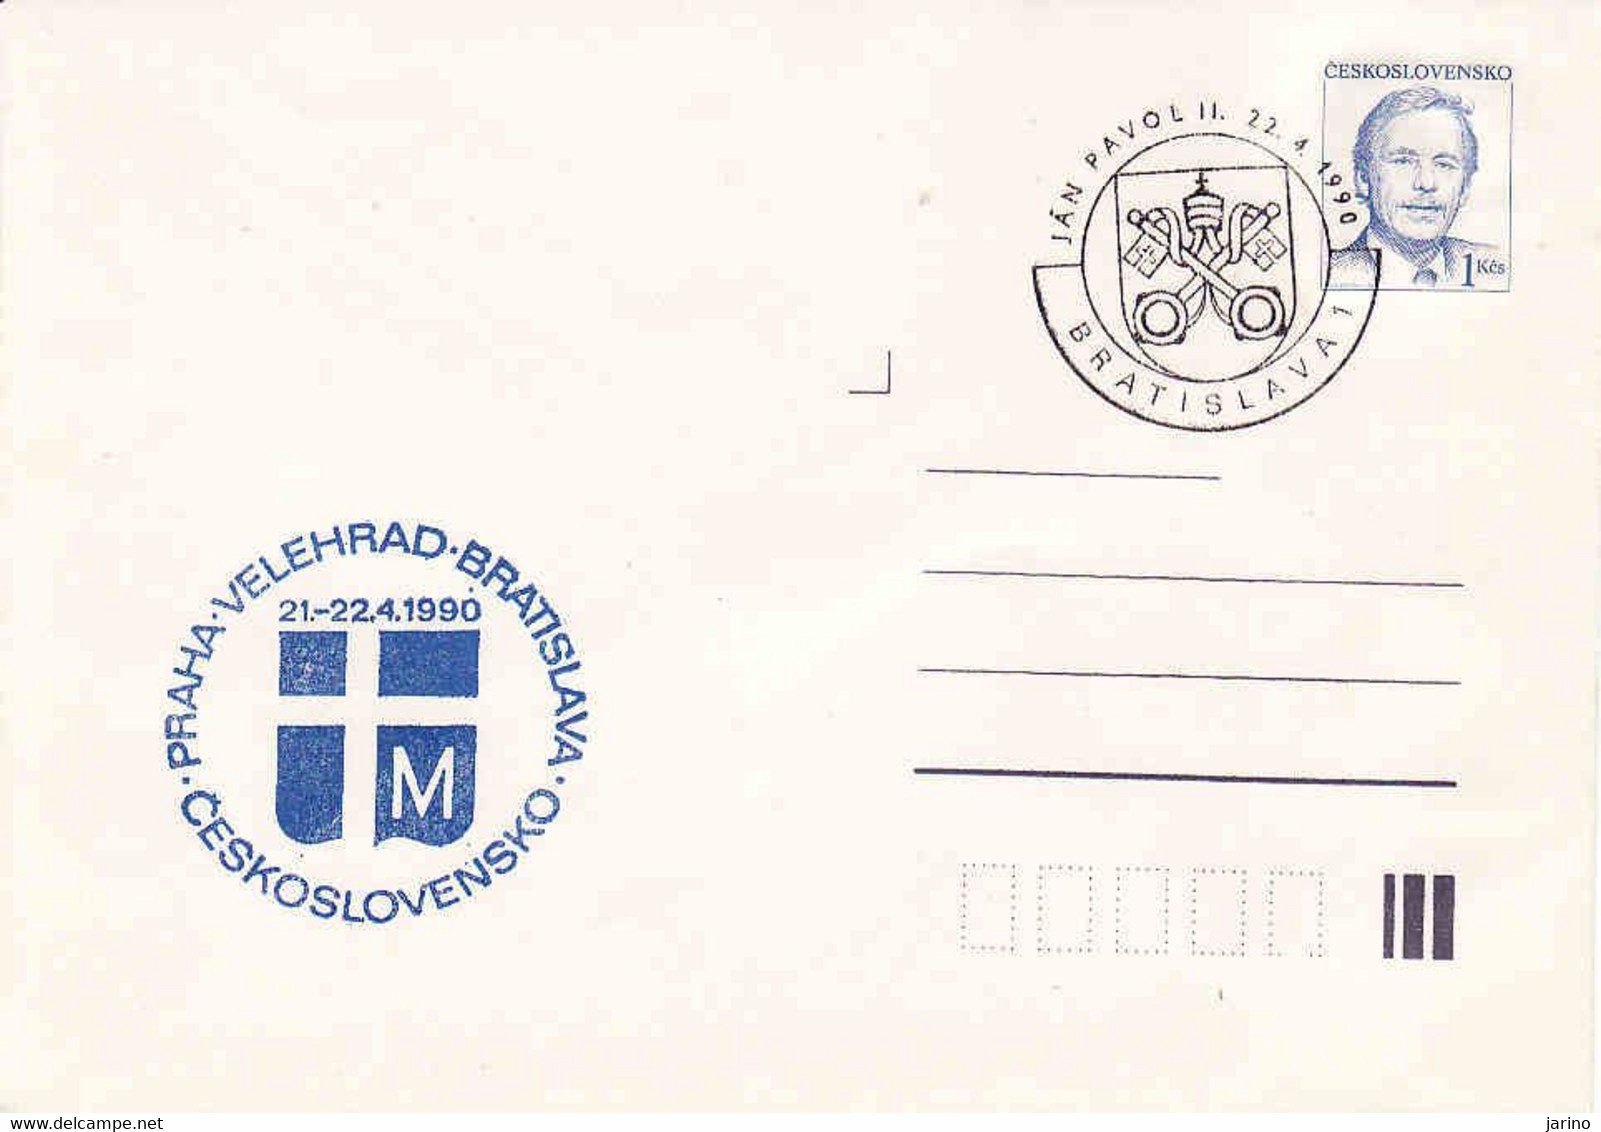 Czechoslovakia 1990, Praha - Velehrad, Bratislava, Visit John Pavul II 21. - 22.4 .1990 - Briefe